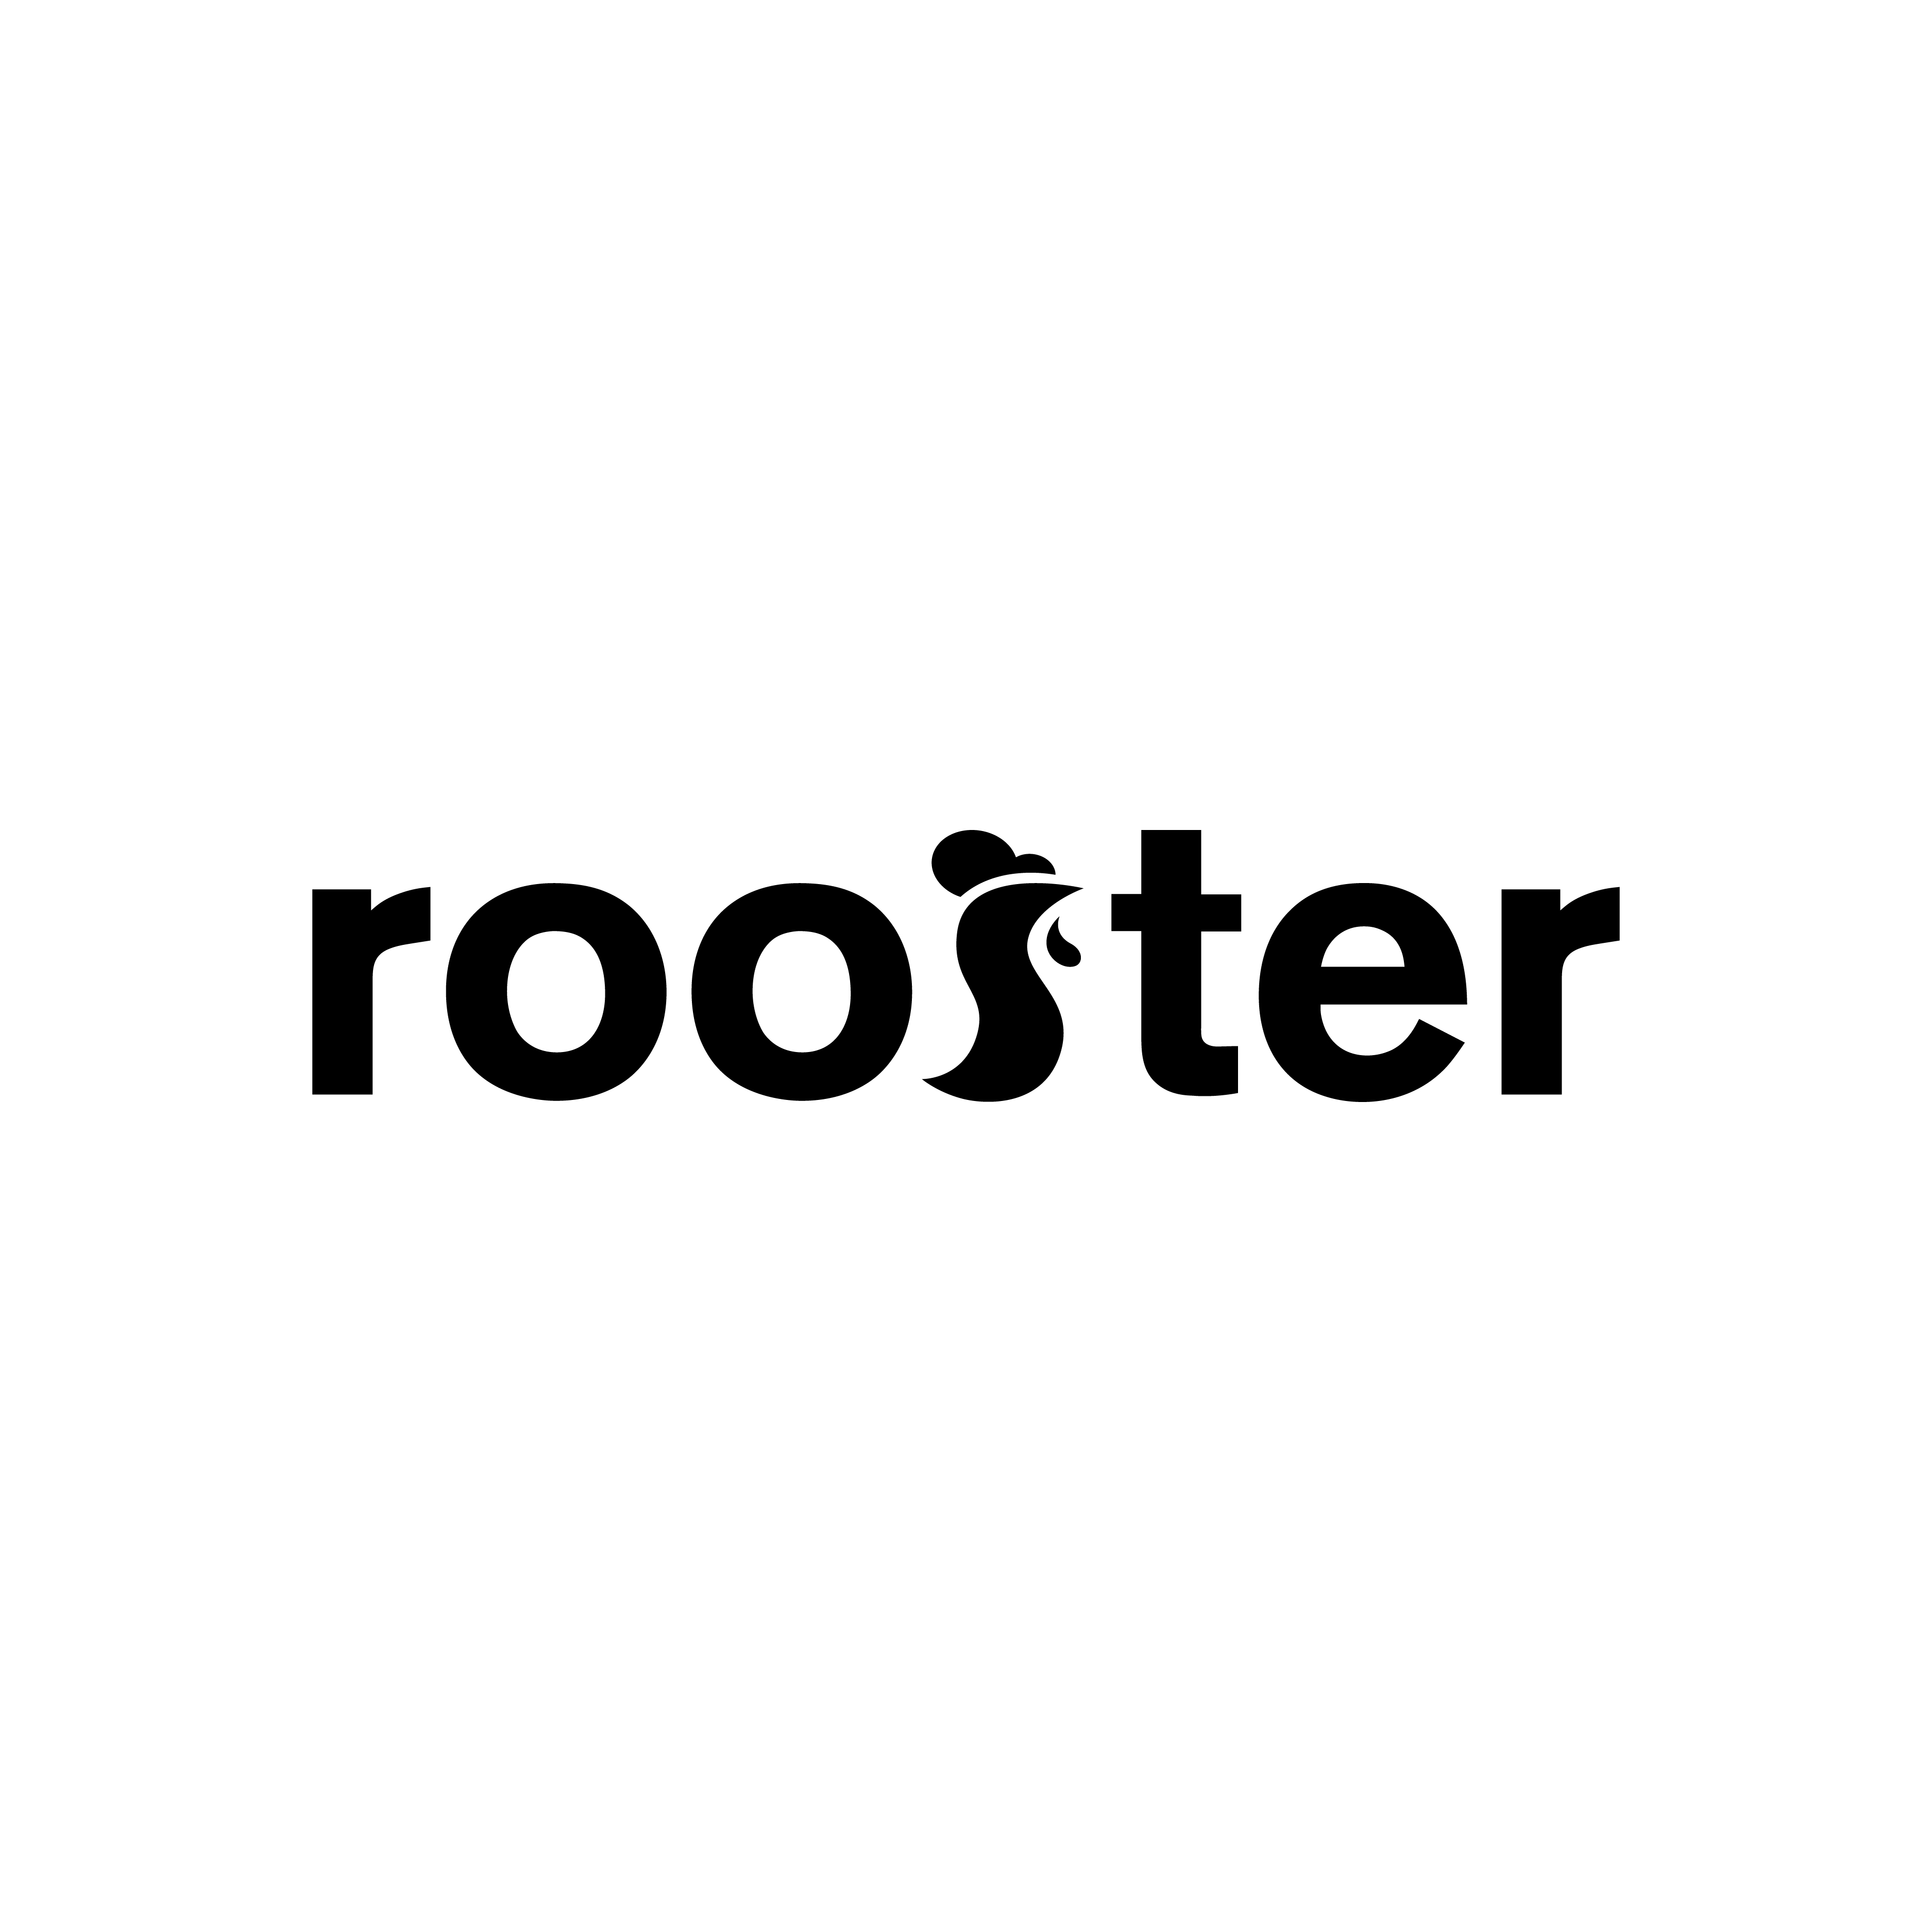 rooster logo design by logo designer Radu Moraru for your inspiration and for the worlds largest logo competition